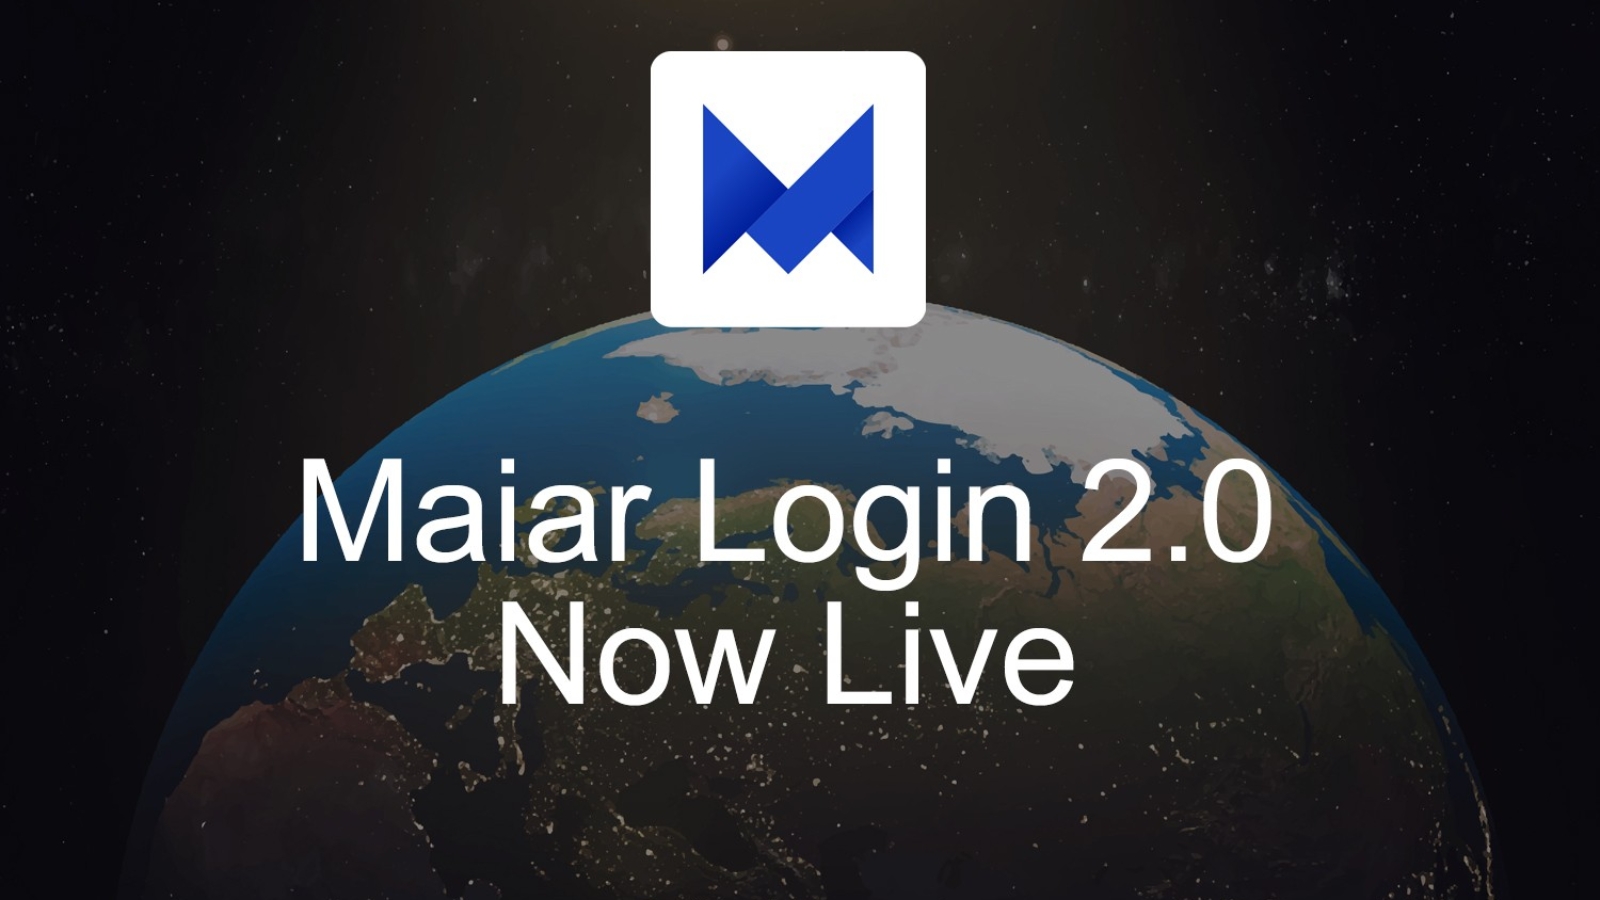 Maiar login 2 is now live